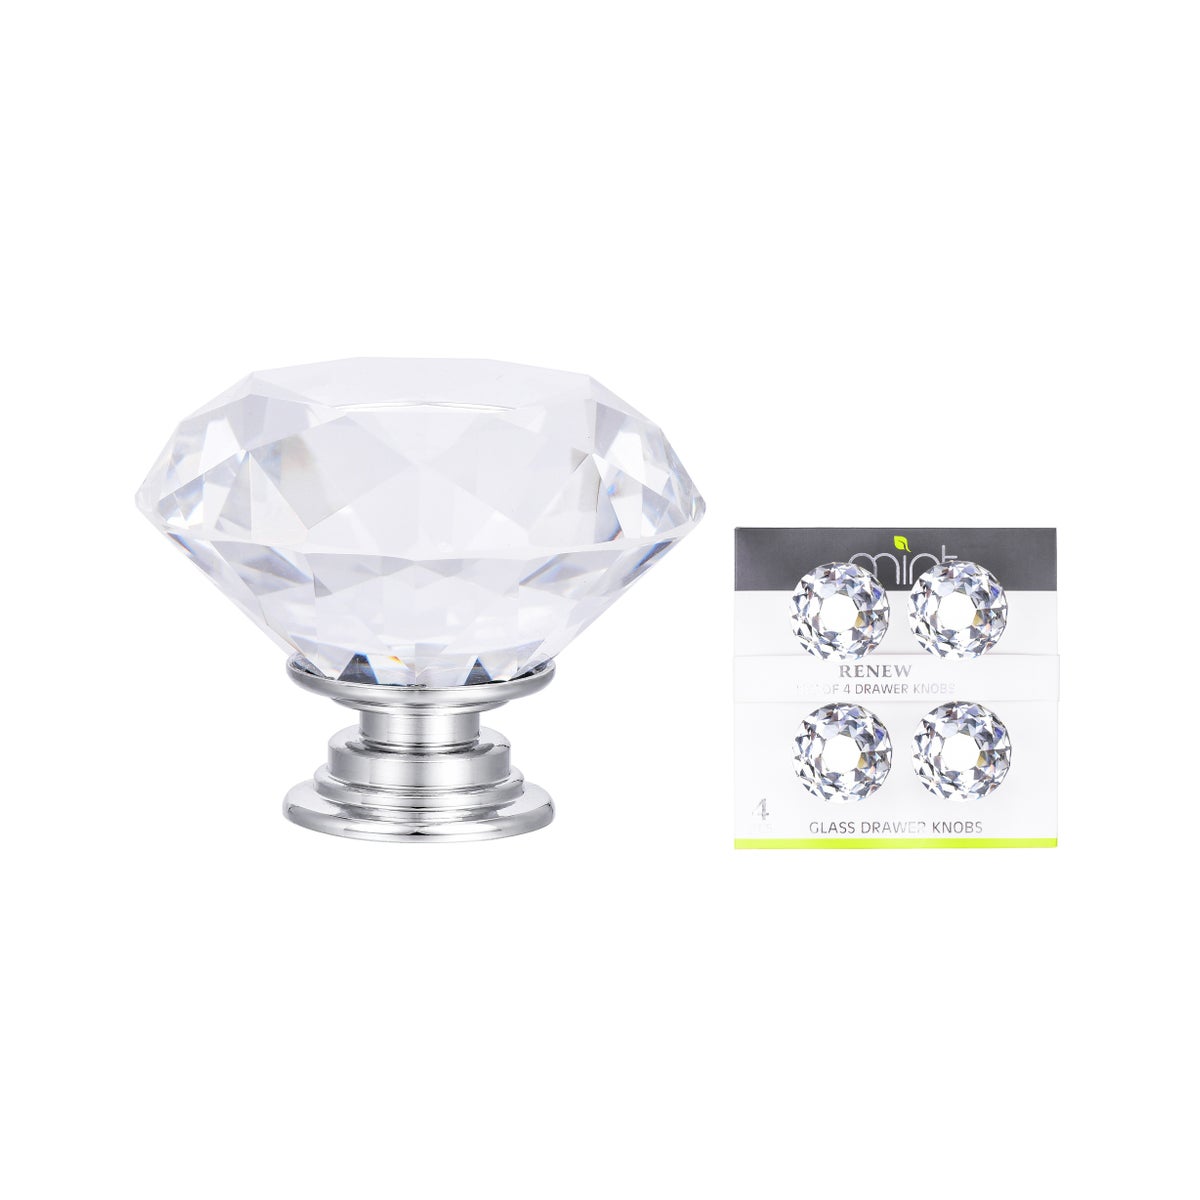 4PC - 40MM Monarch Crystal Glass Knob Pull Handles (12 Set)